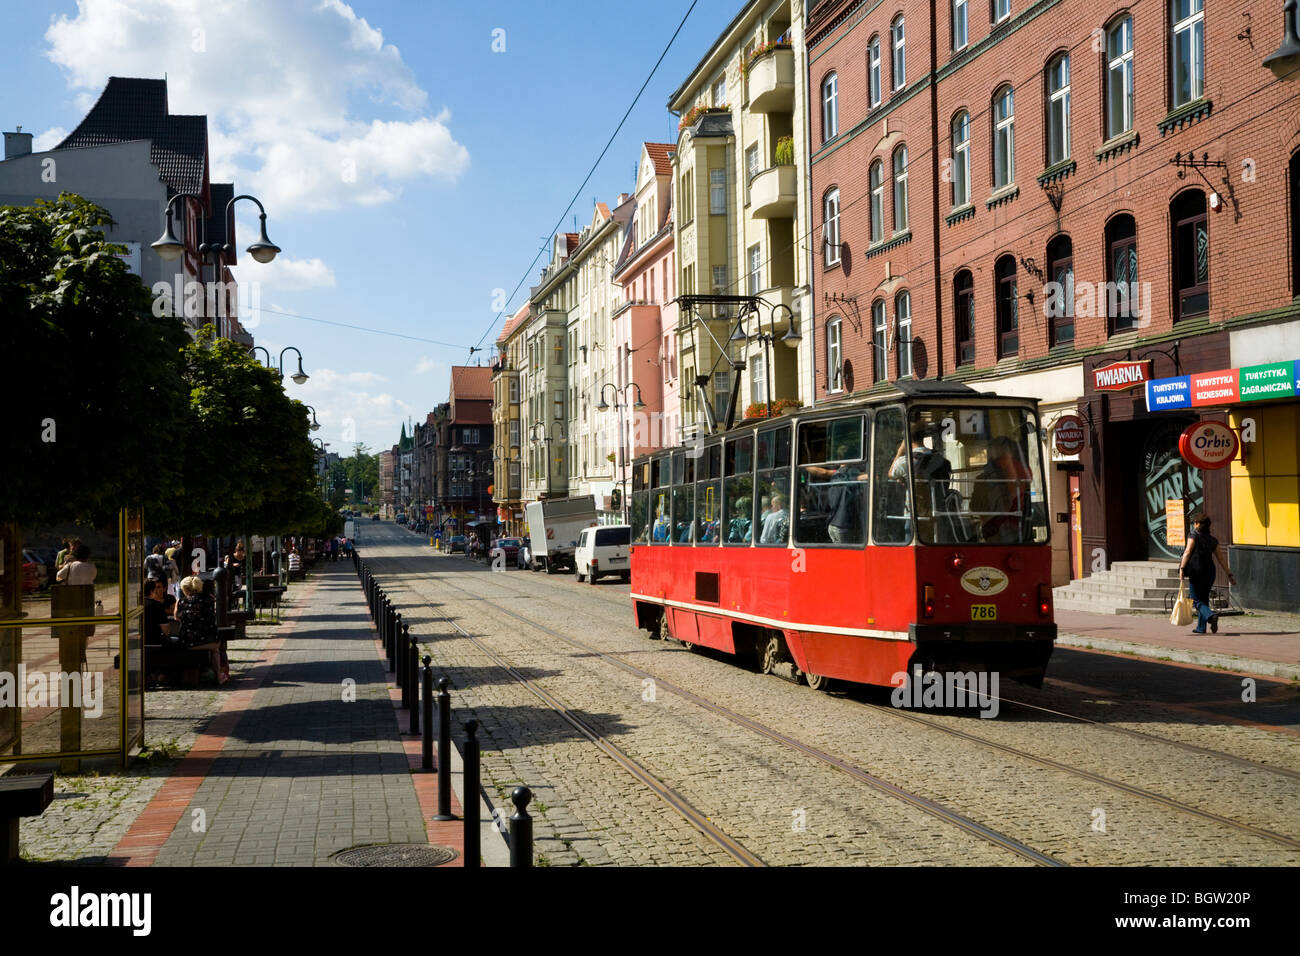 Tram in town centre of Zabrze, Silesia. Poland. Stock Photo